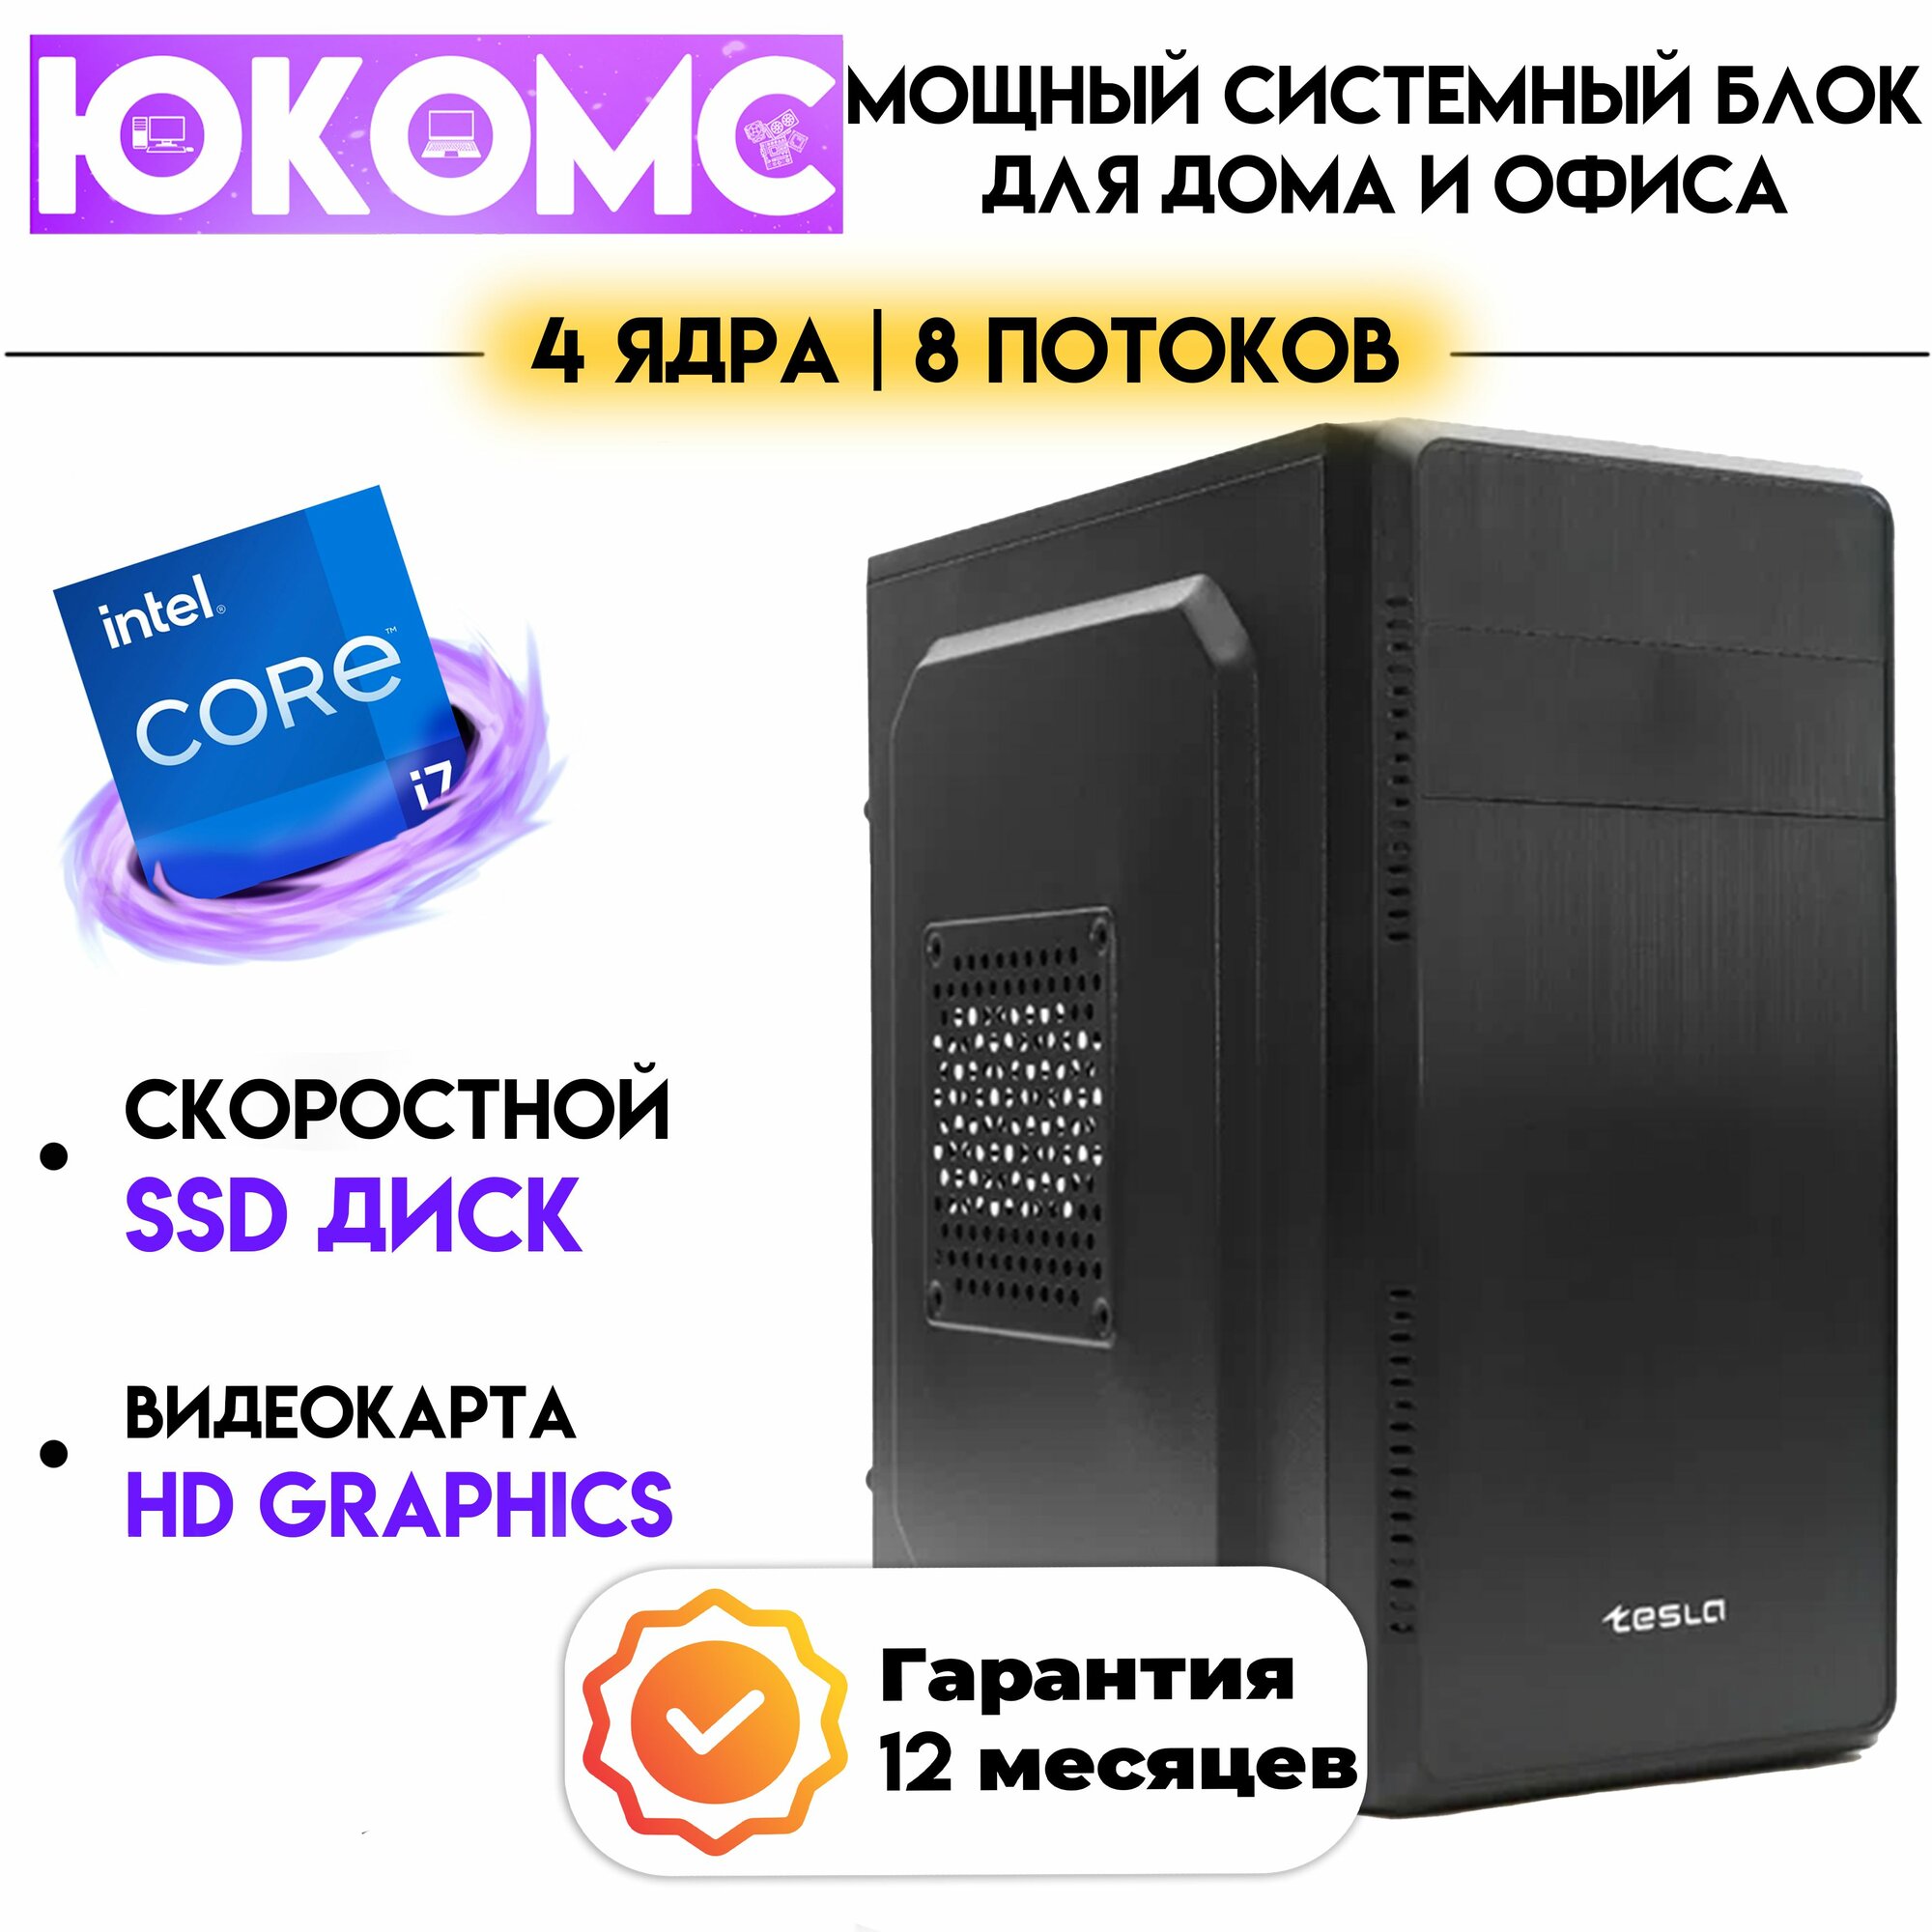 PC юкомс Core i7 2600, SSD 240GB, 8GB DDR3, БП 350W, win 10 pro, Classic black